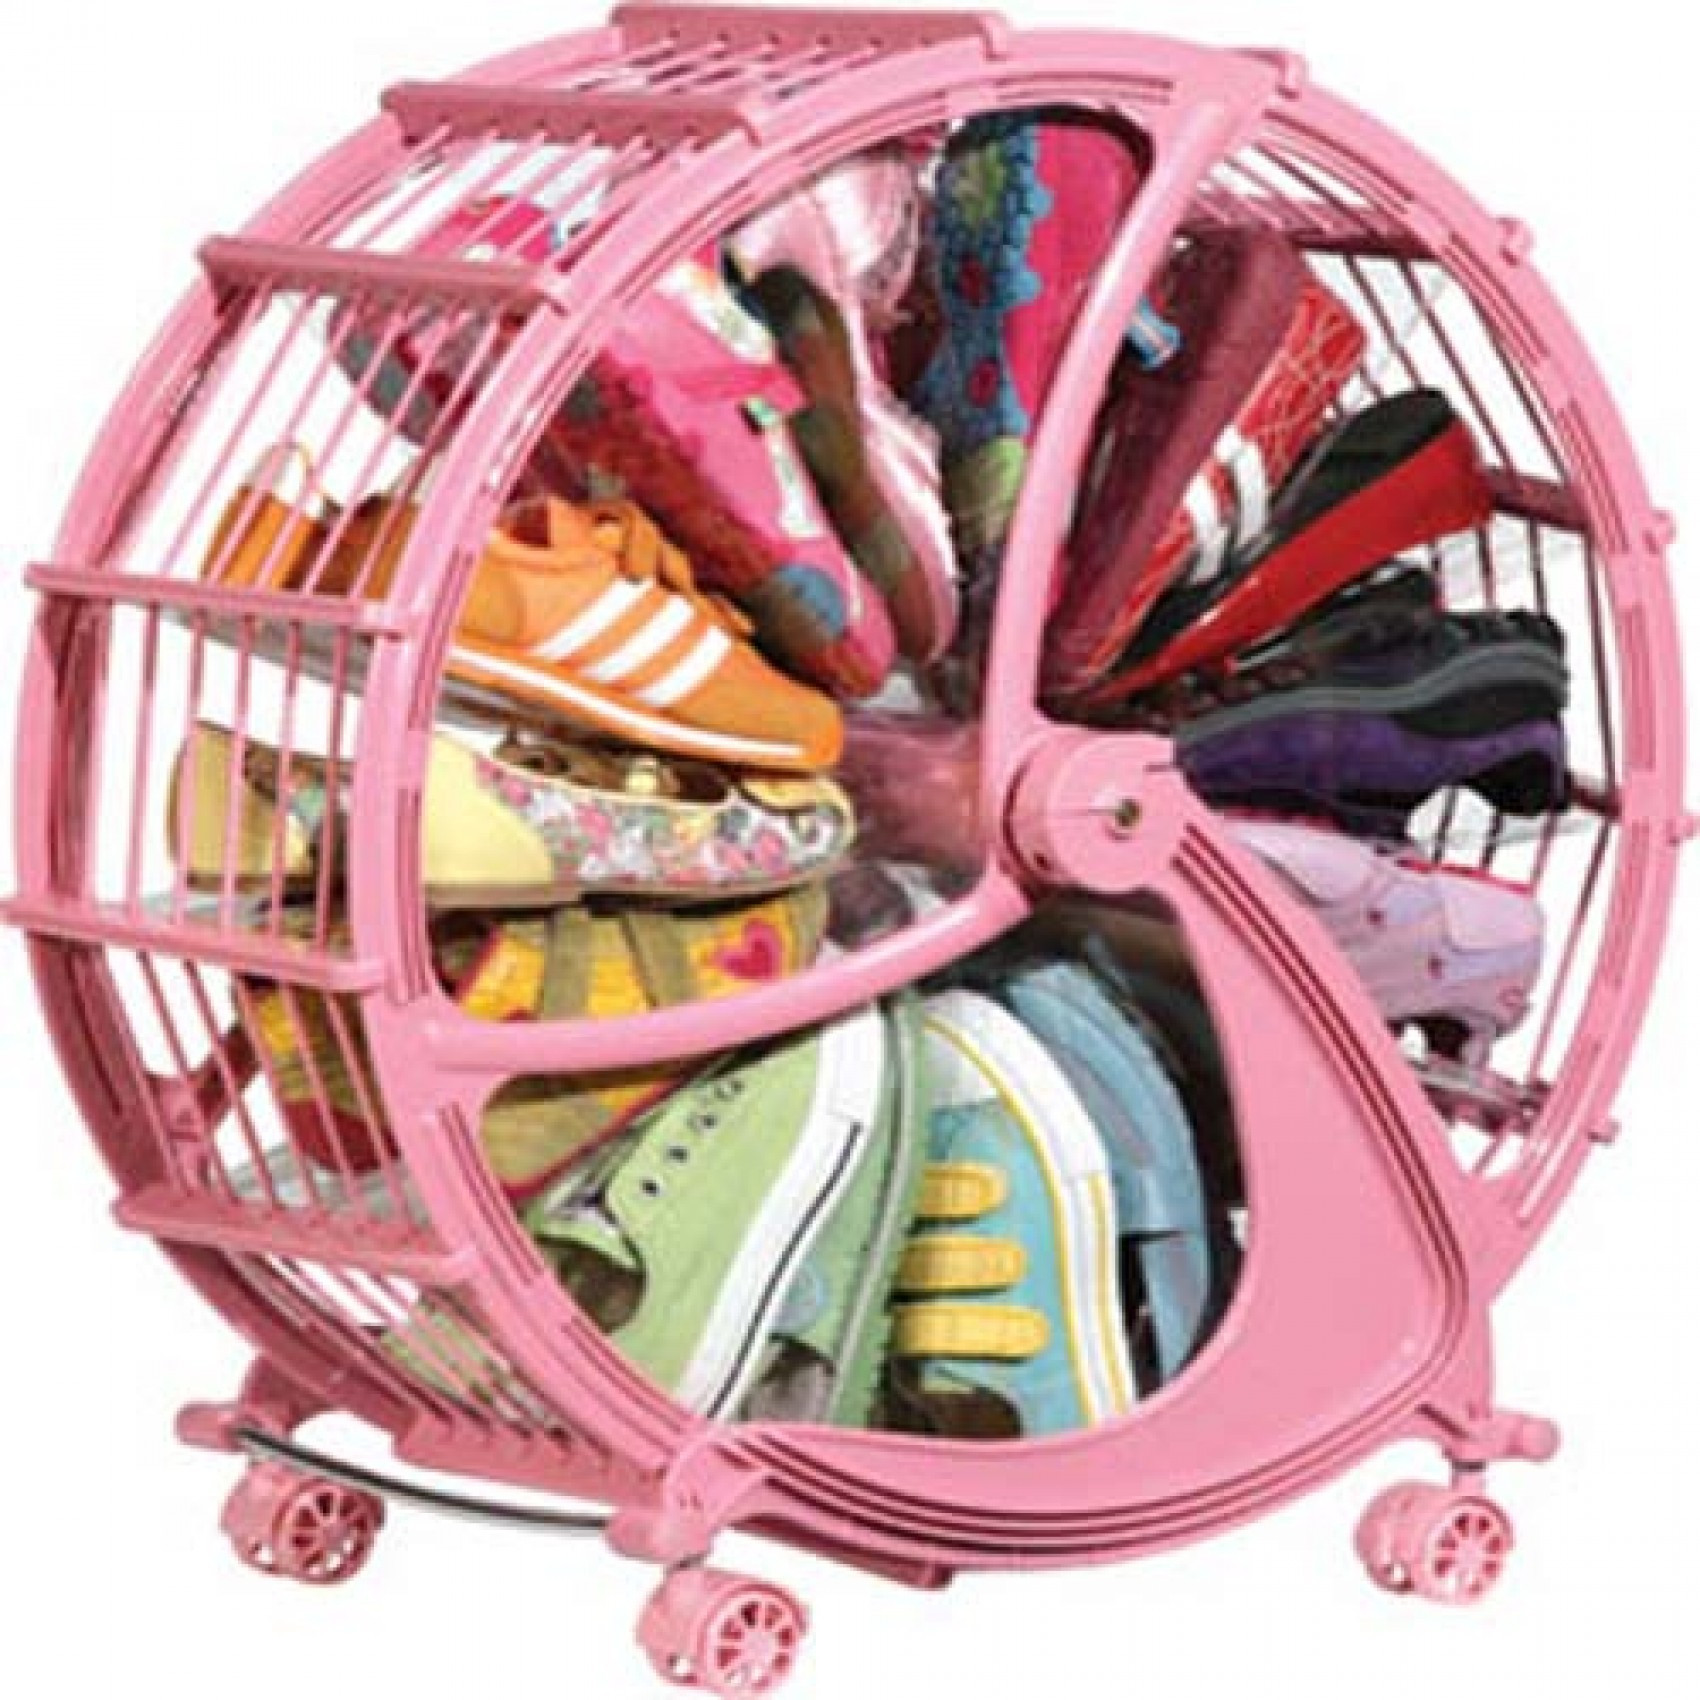 Kids Shoes Storage
 56cm 12 Pairs Shoe Wheel Storage Pink